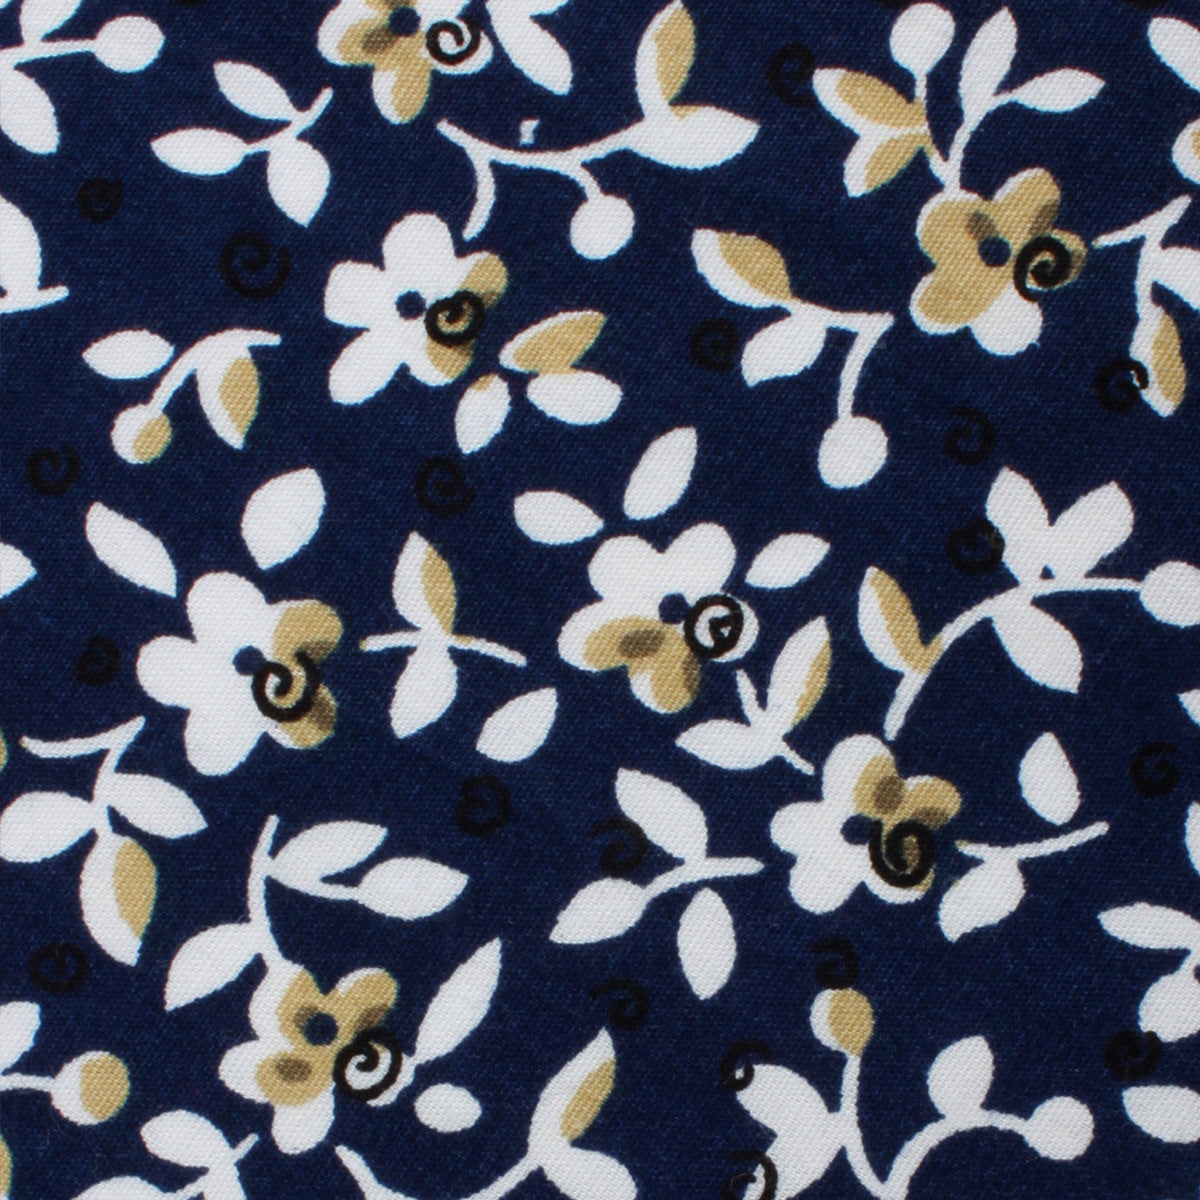 Yukata Navy Blue Floral Pocket Square Fabric